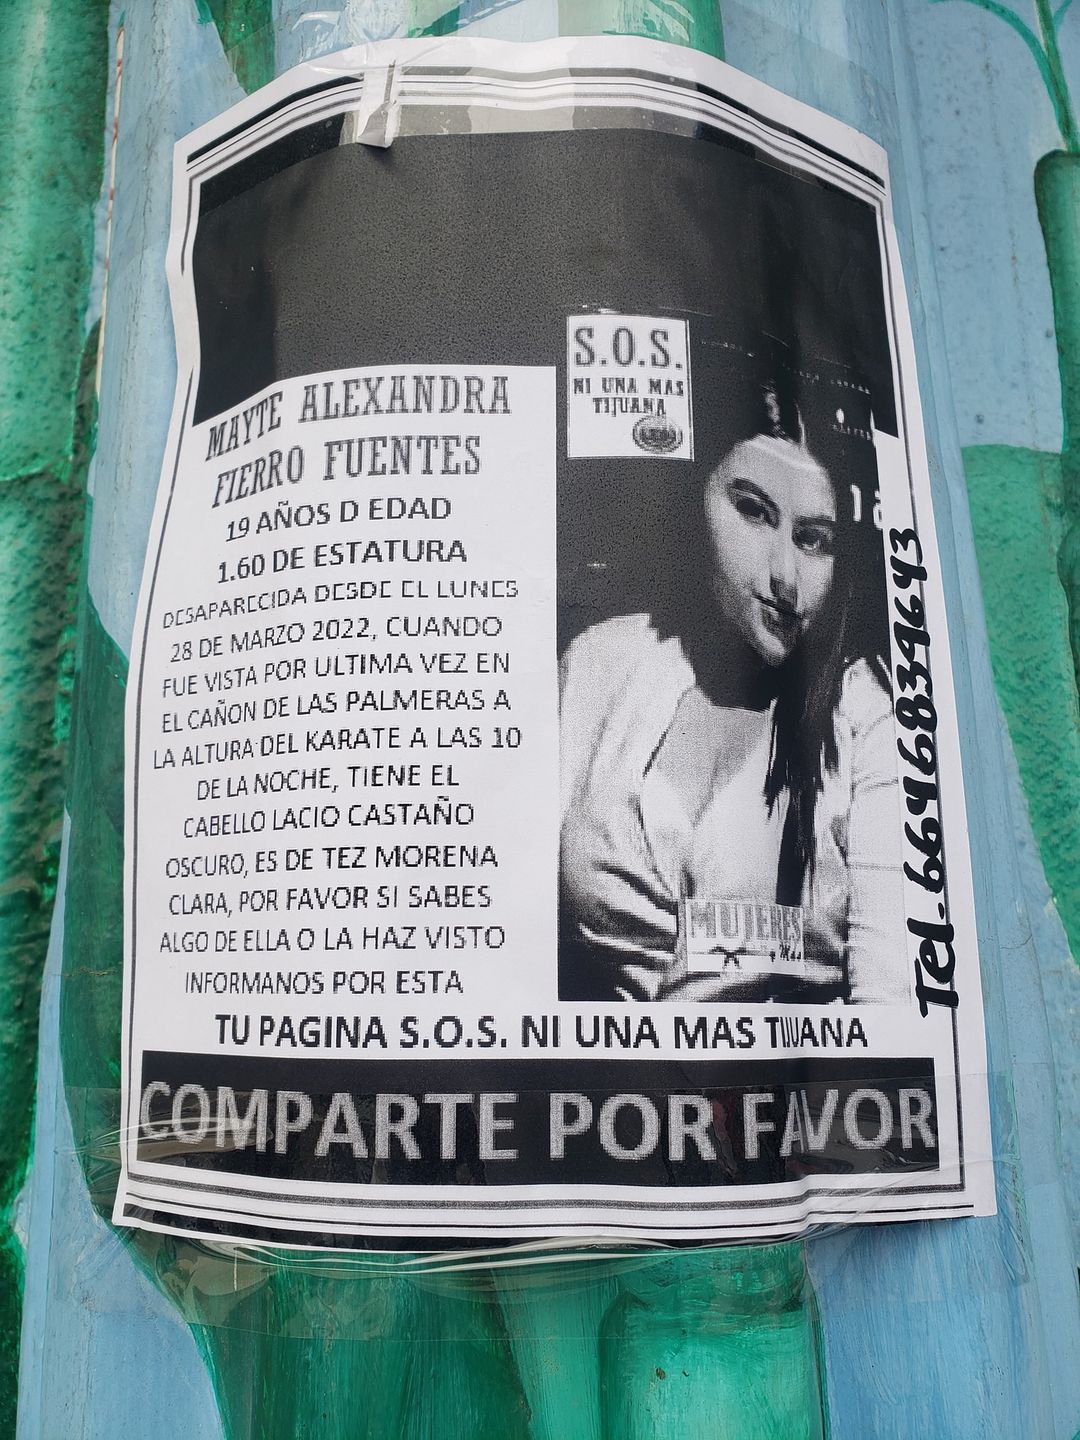 Dónde está Mayte Alexandra Fierro Fuentes? 